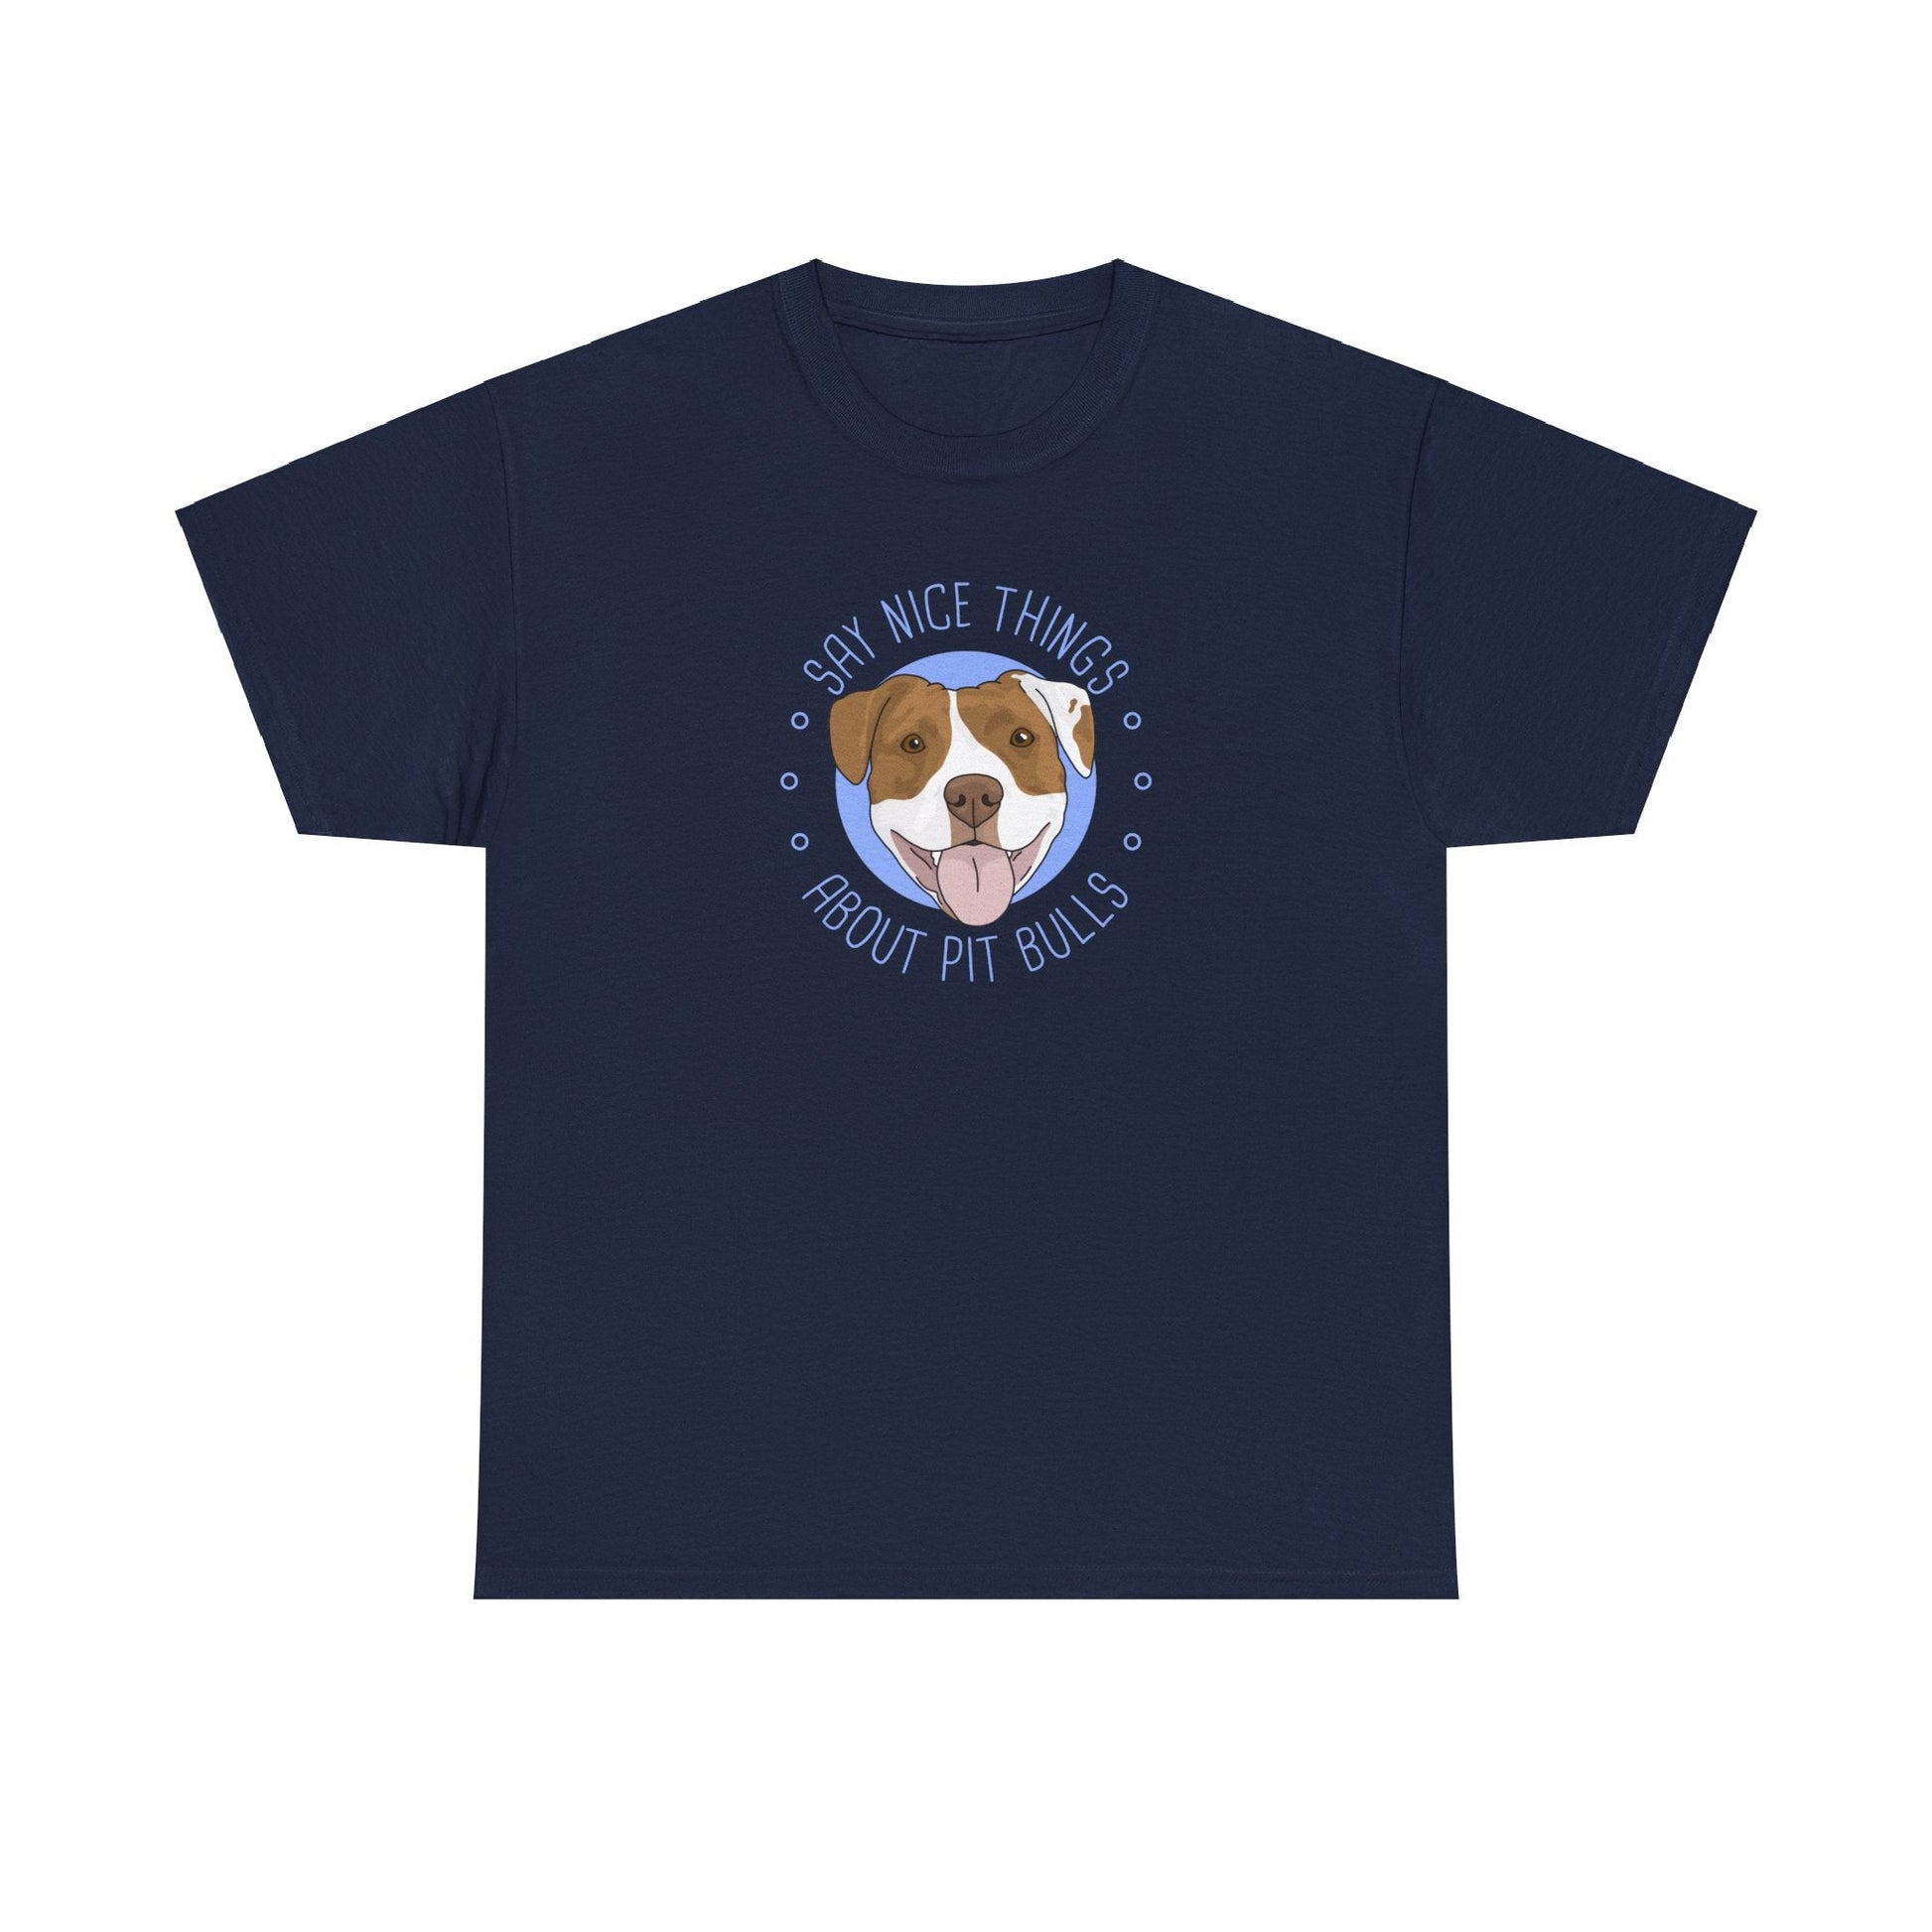 Say Nice Things About Pit Bulls | T-shirt - Detezi Designs-20823798383389929476